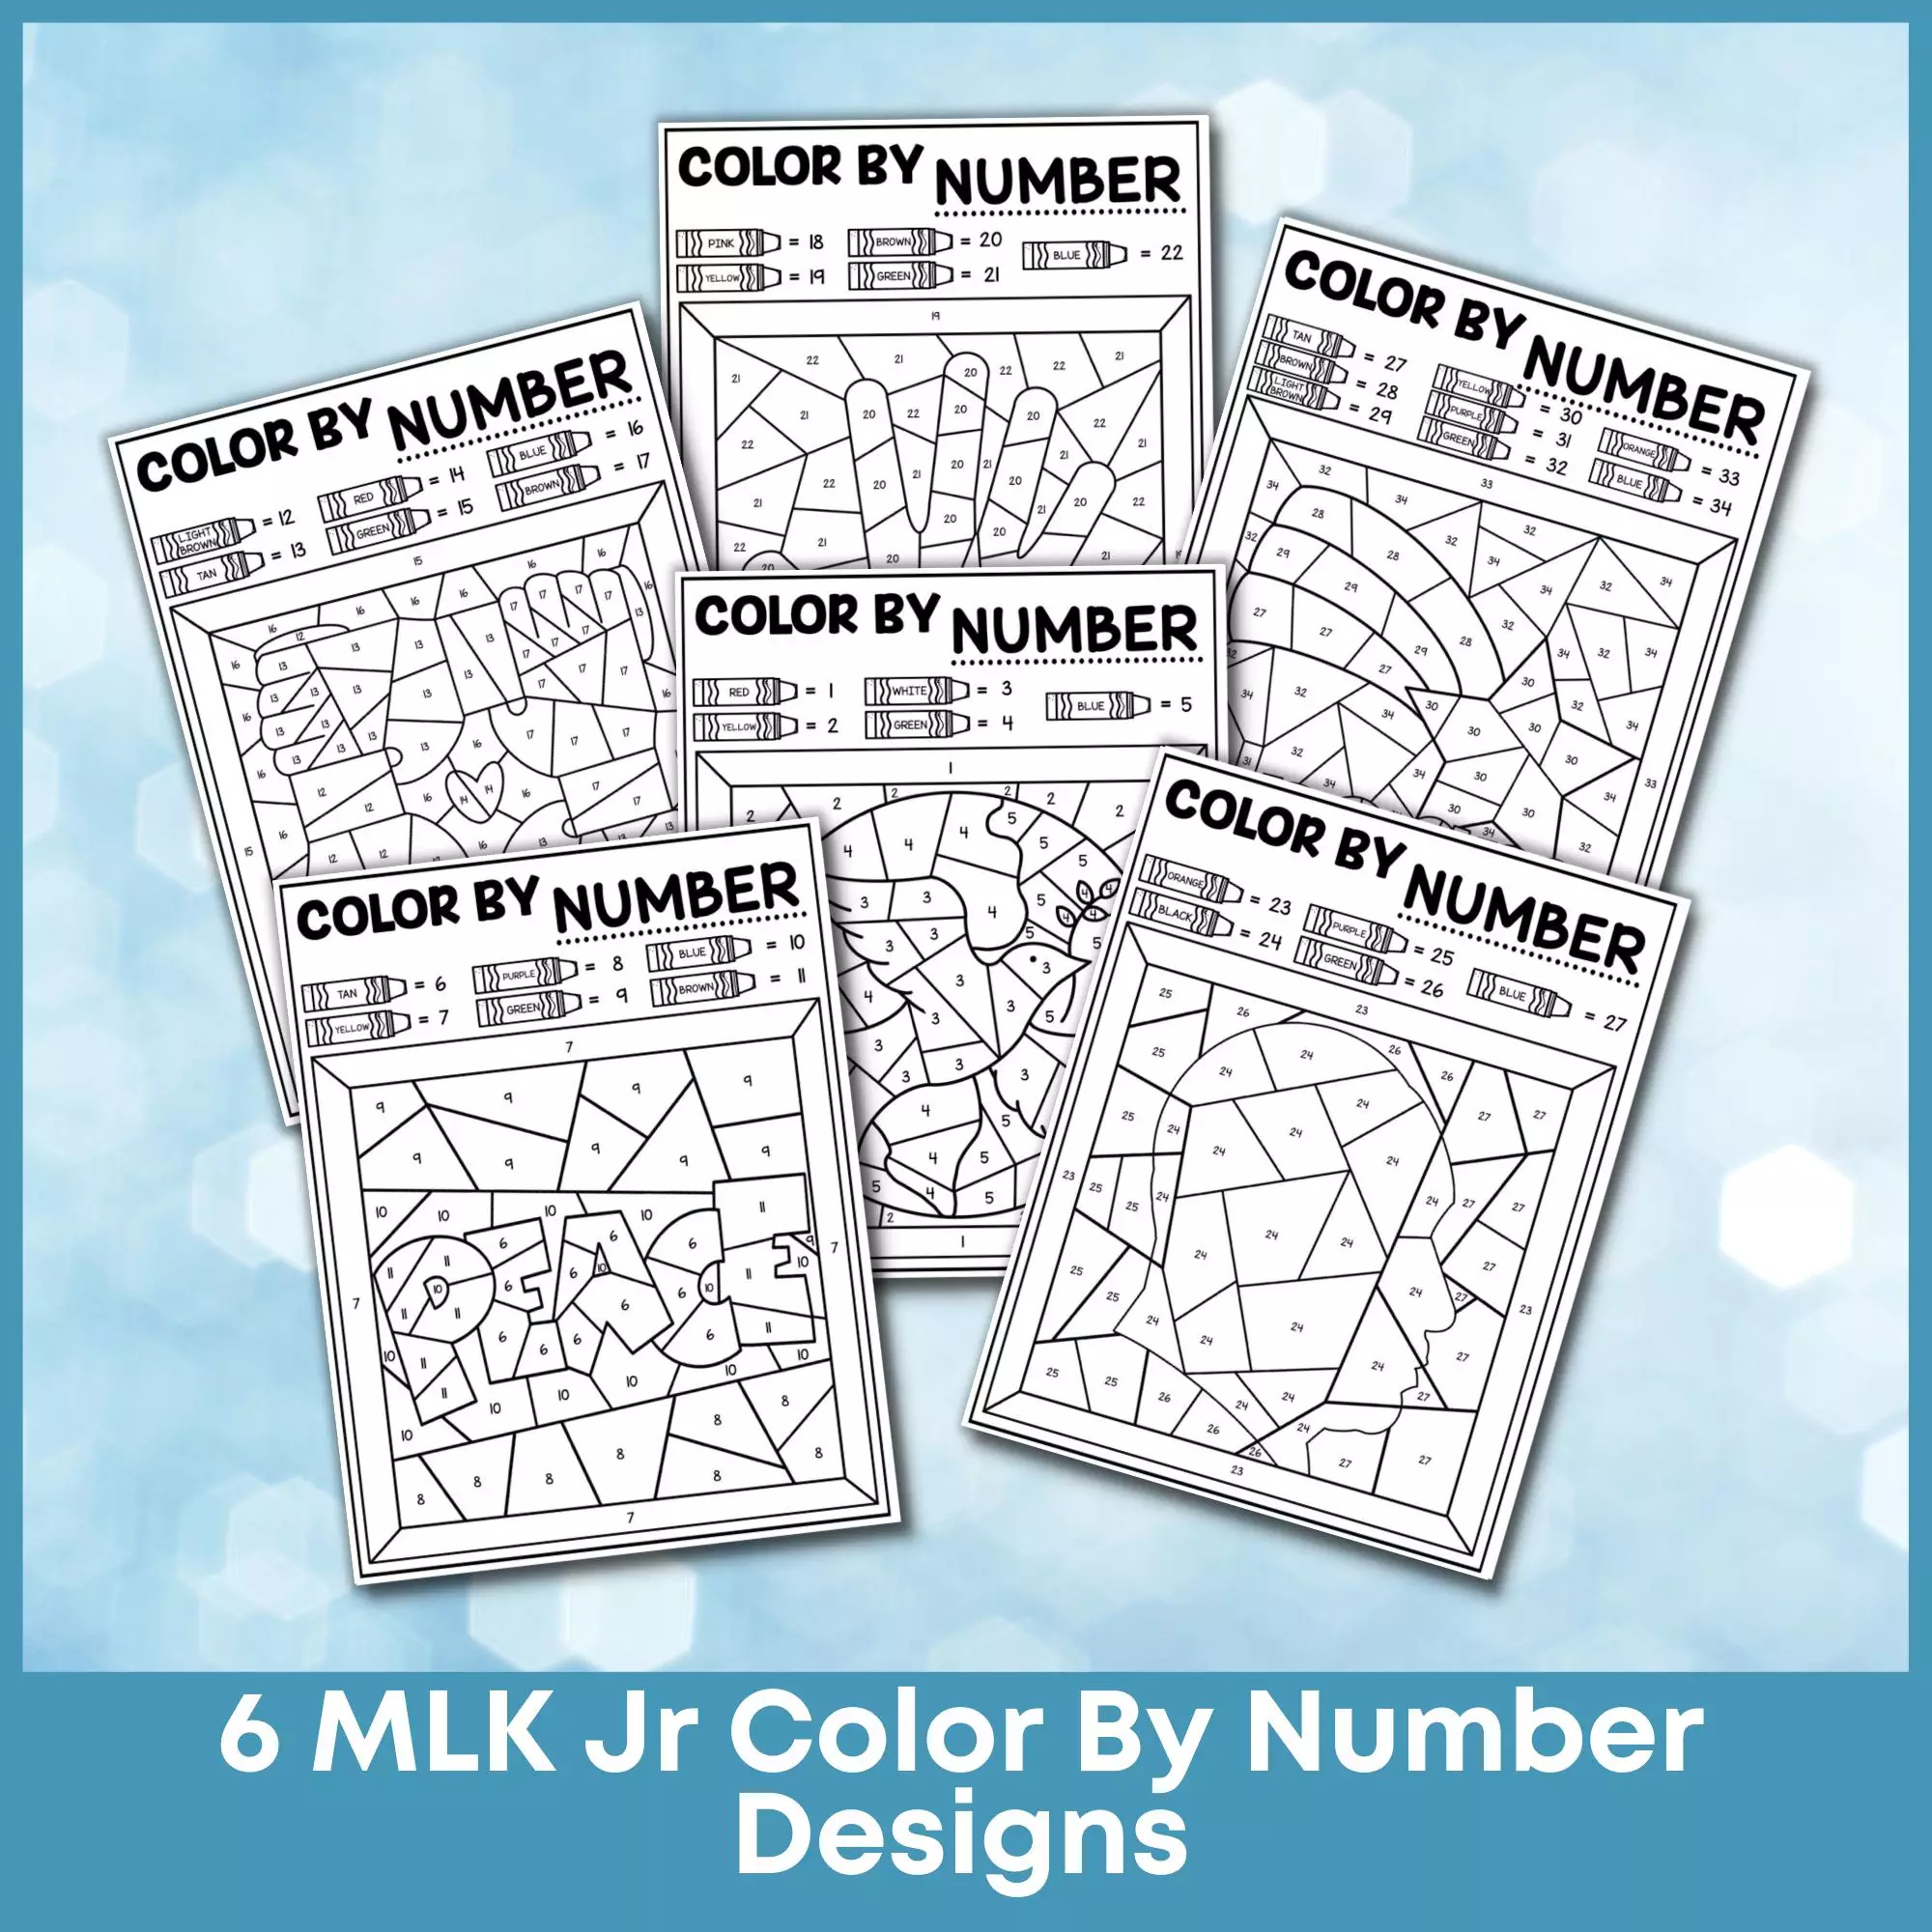 Martin Luther King Jr color by number mockup